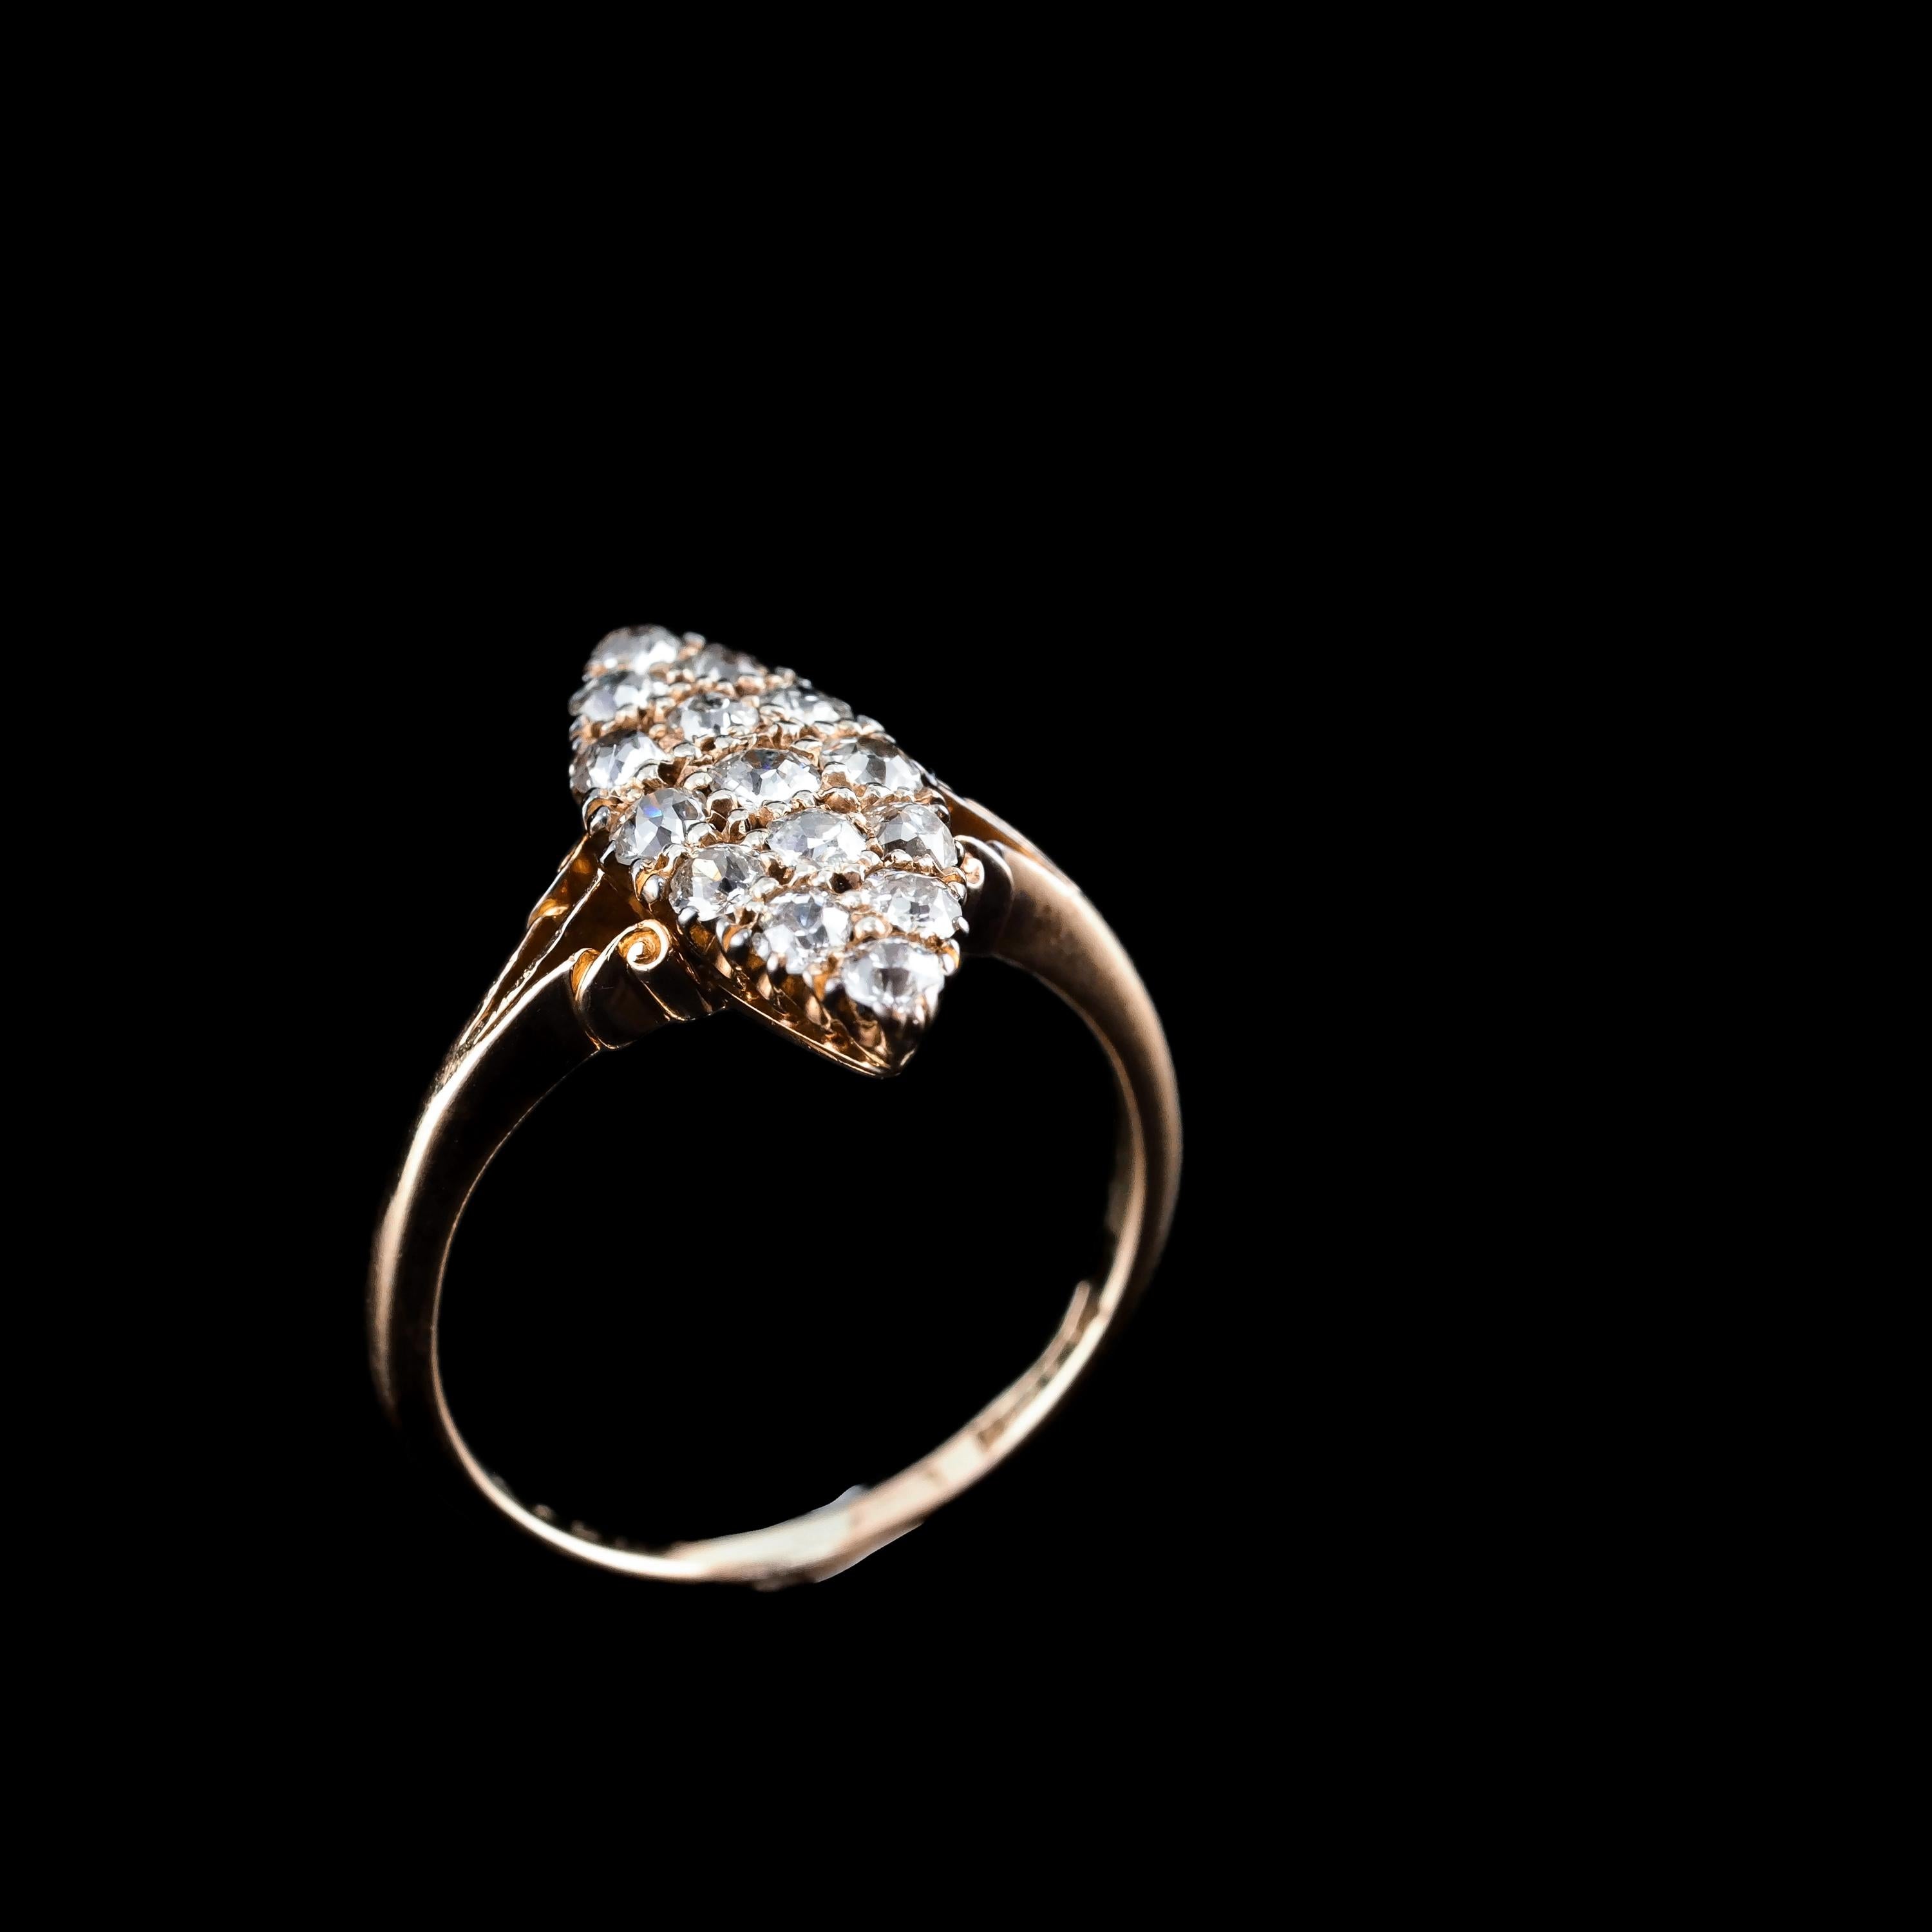 Old European Cut Antique Diamond Ring 18K Gold Navette/Cluster Design - c.1900s For Sale